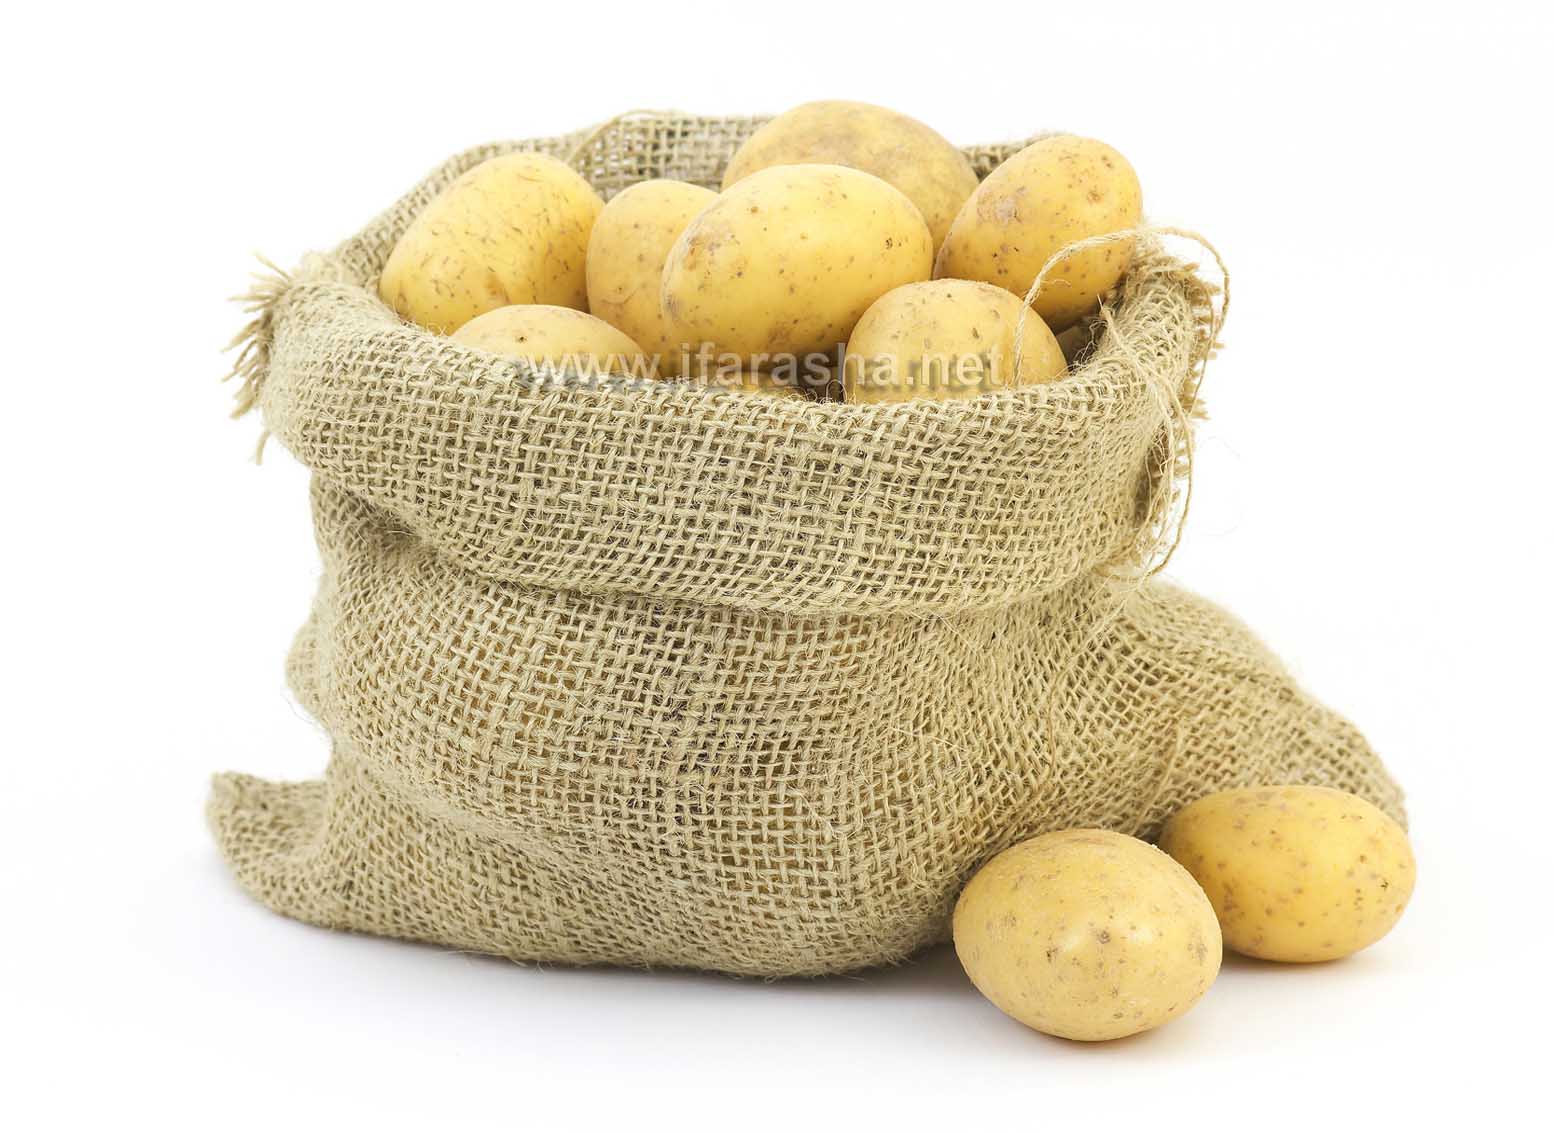 IFARASHA – استعمال البطاطا كمنظف